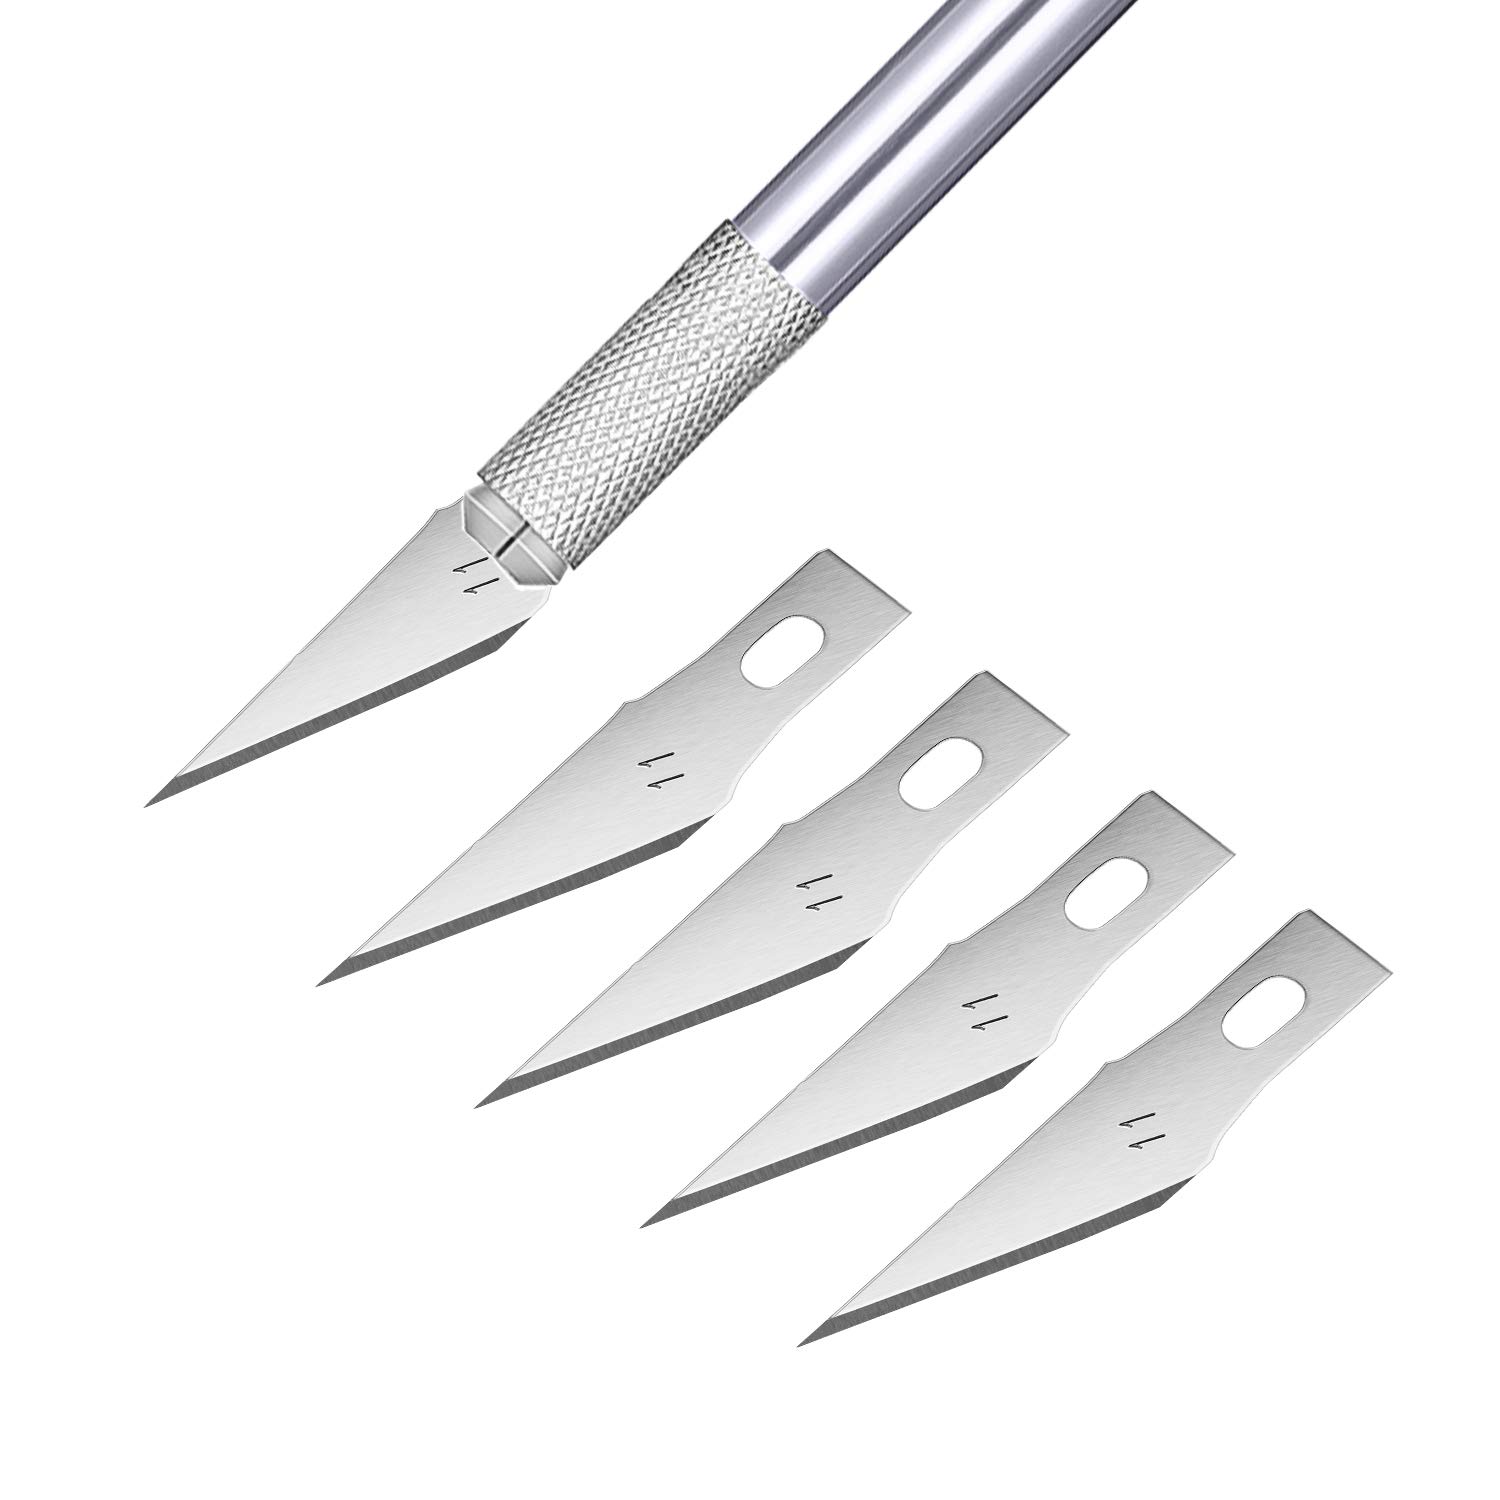 Sharp knife blade